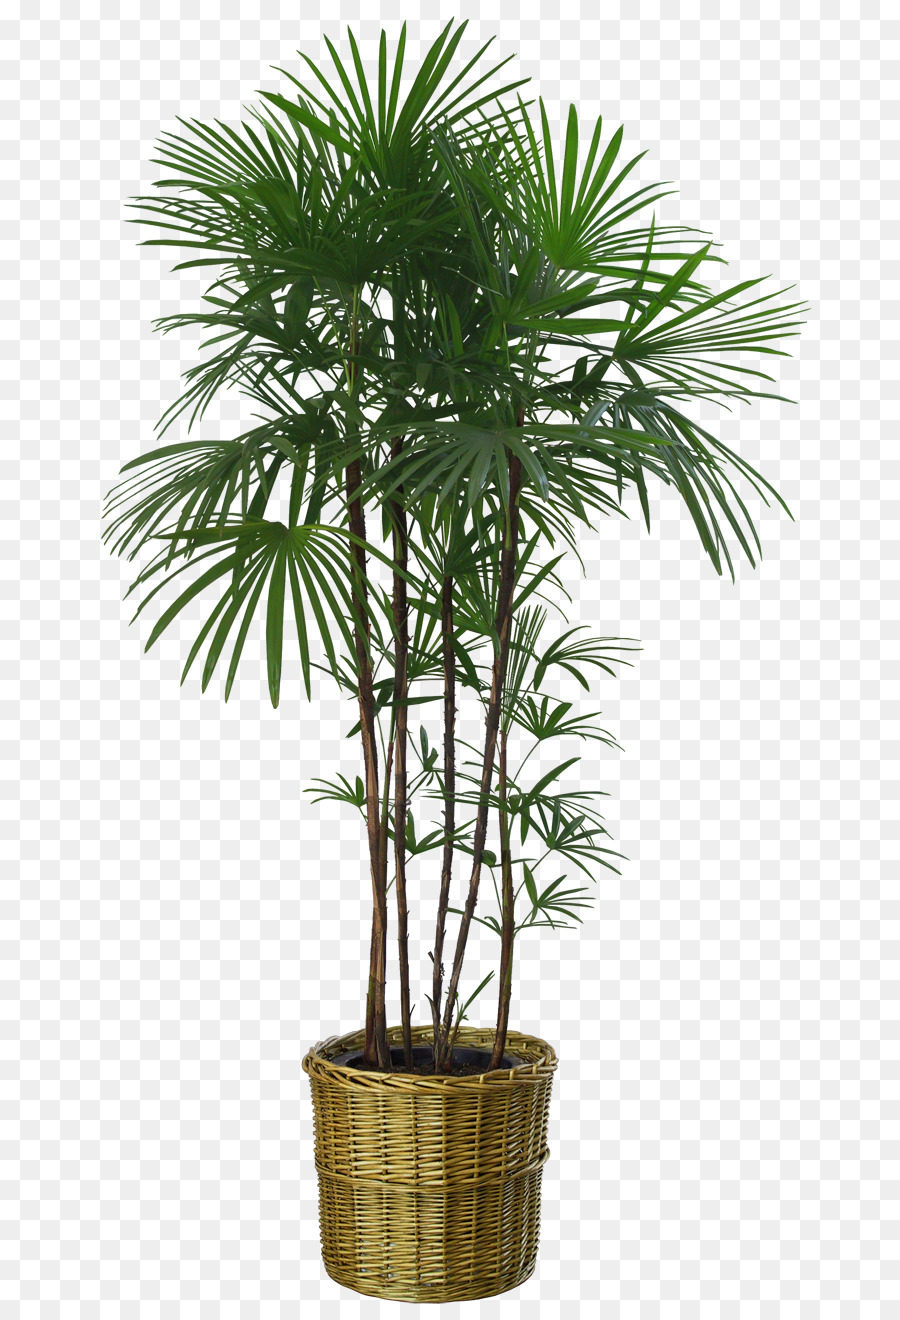 Flowerpot Houseplant Tree Bench Bamboo - plant png download - 760*1320 - Free Transparent Flowerpot png Download.